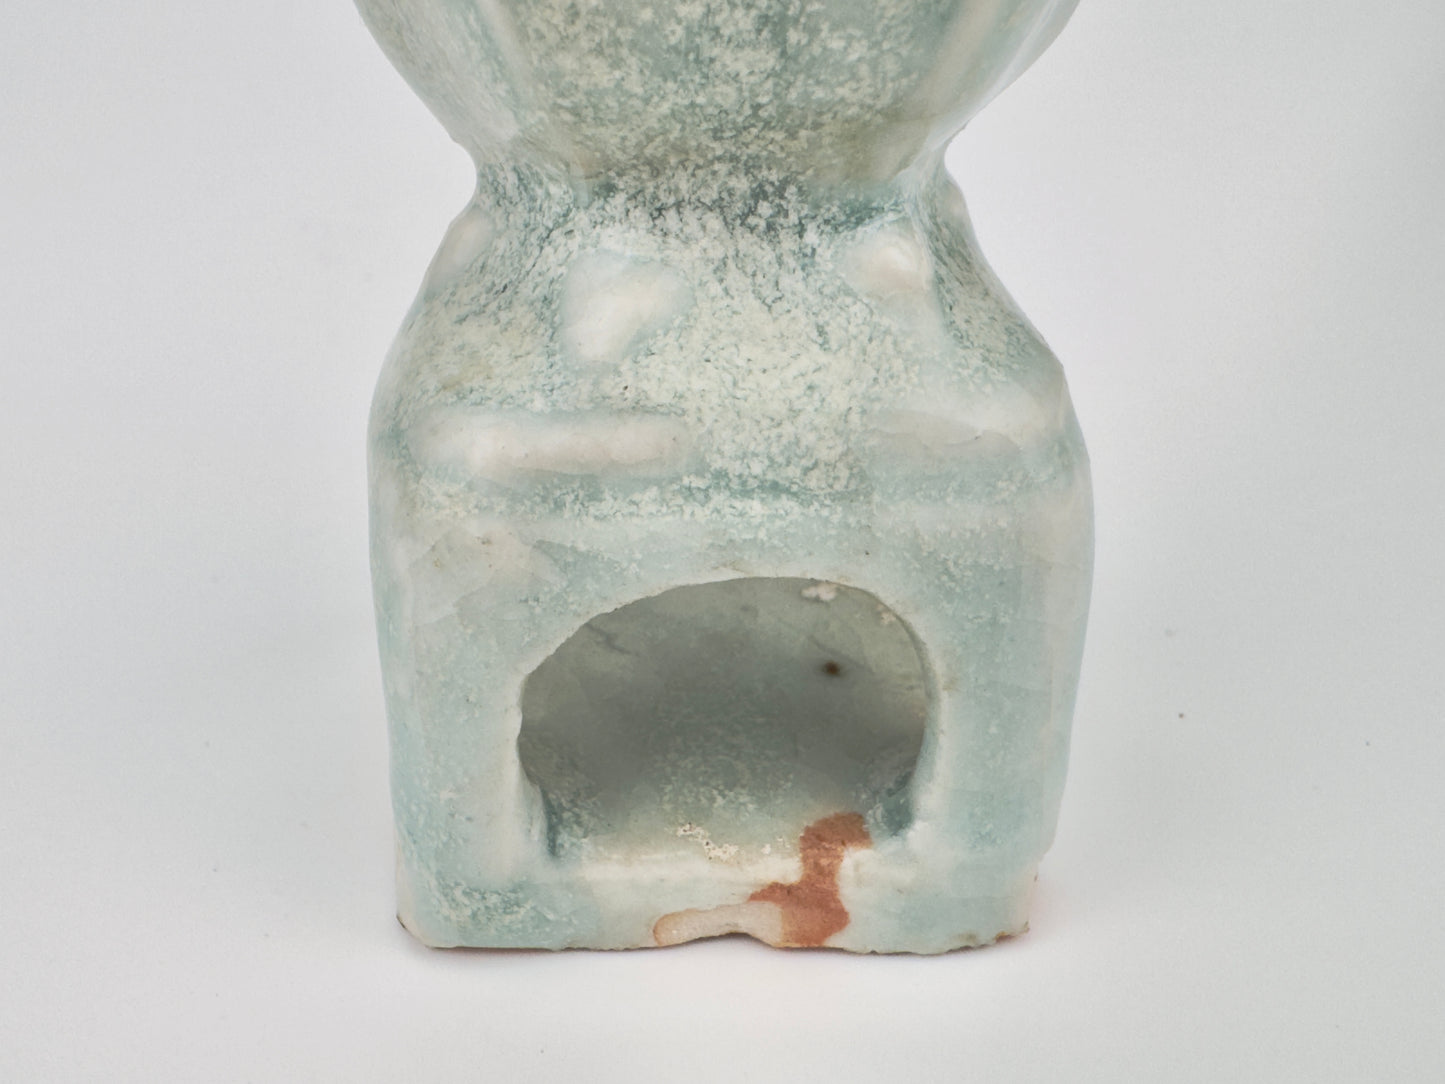 Small Qingbai Pear-Shaped Vase, Yuan Dynasty(13-14th century)